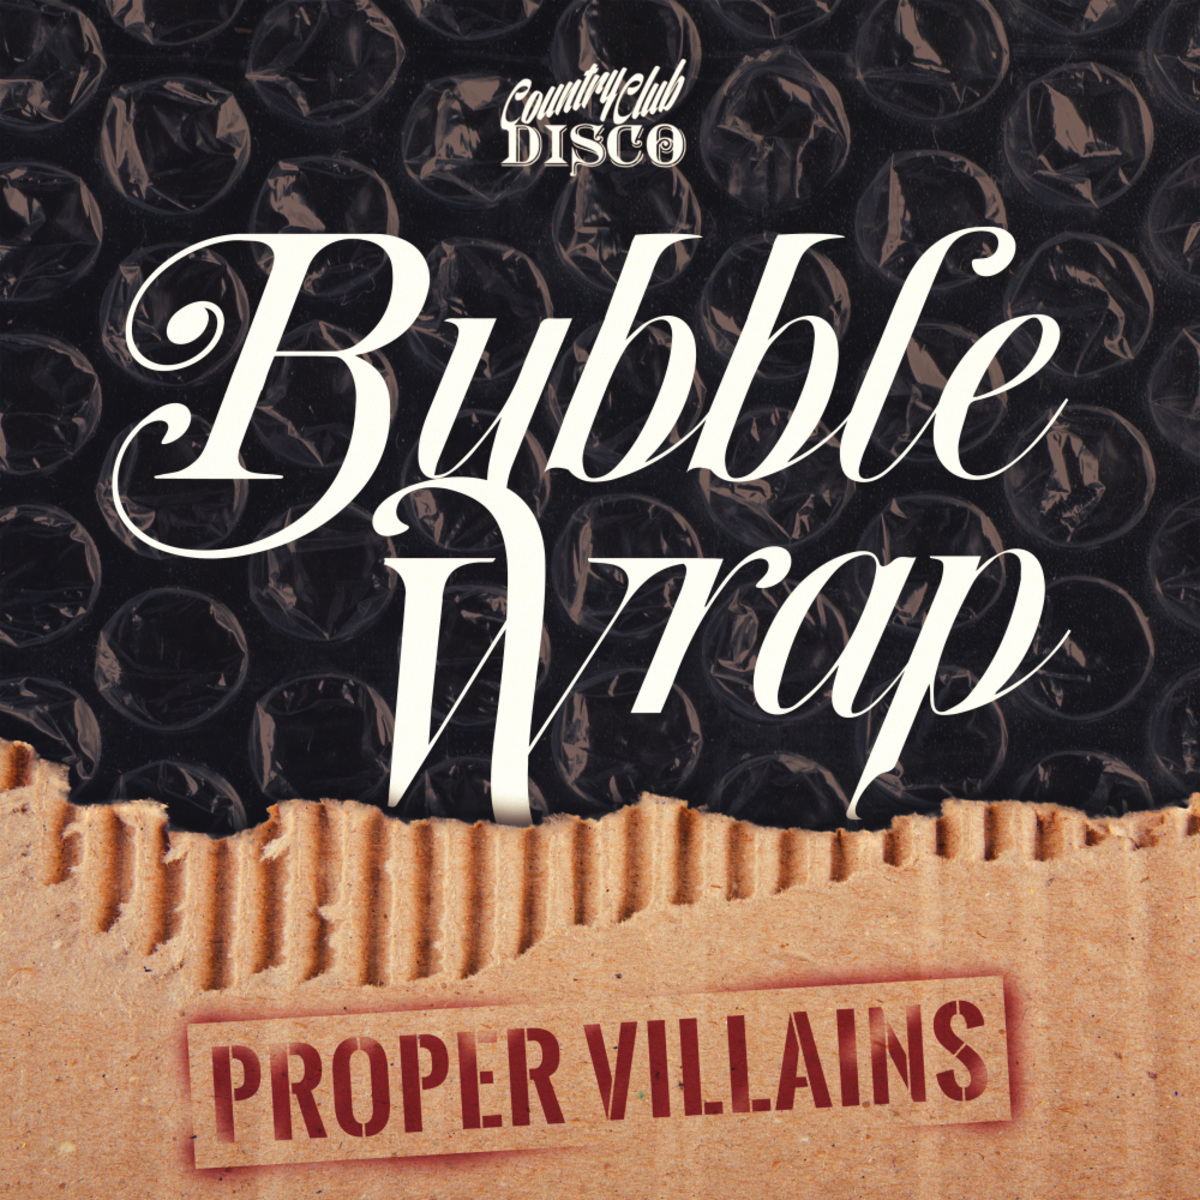 Proper Villains - Bubble Wrap EP / Country Club Disco